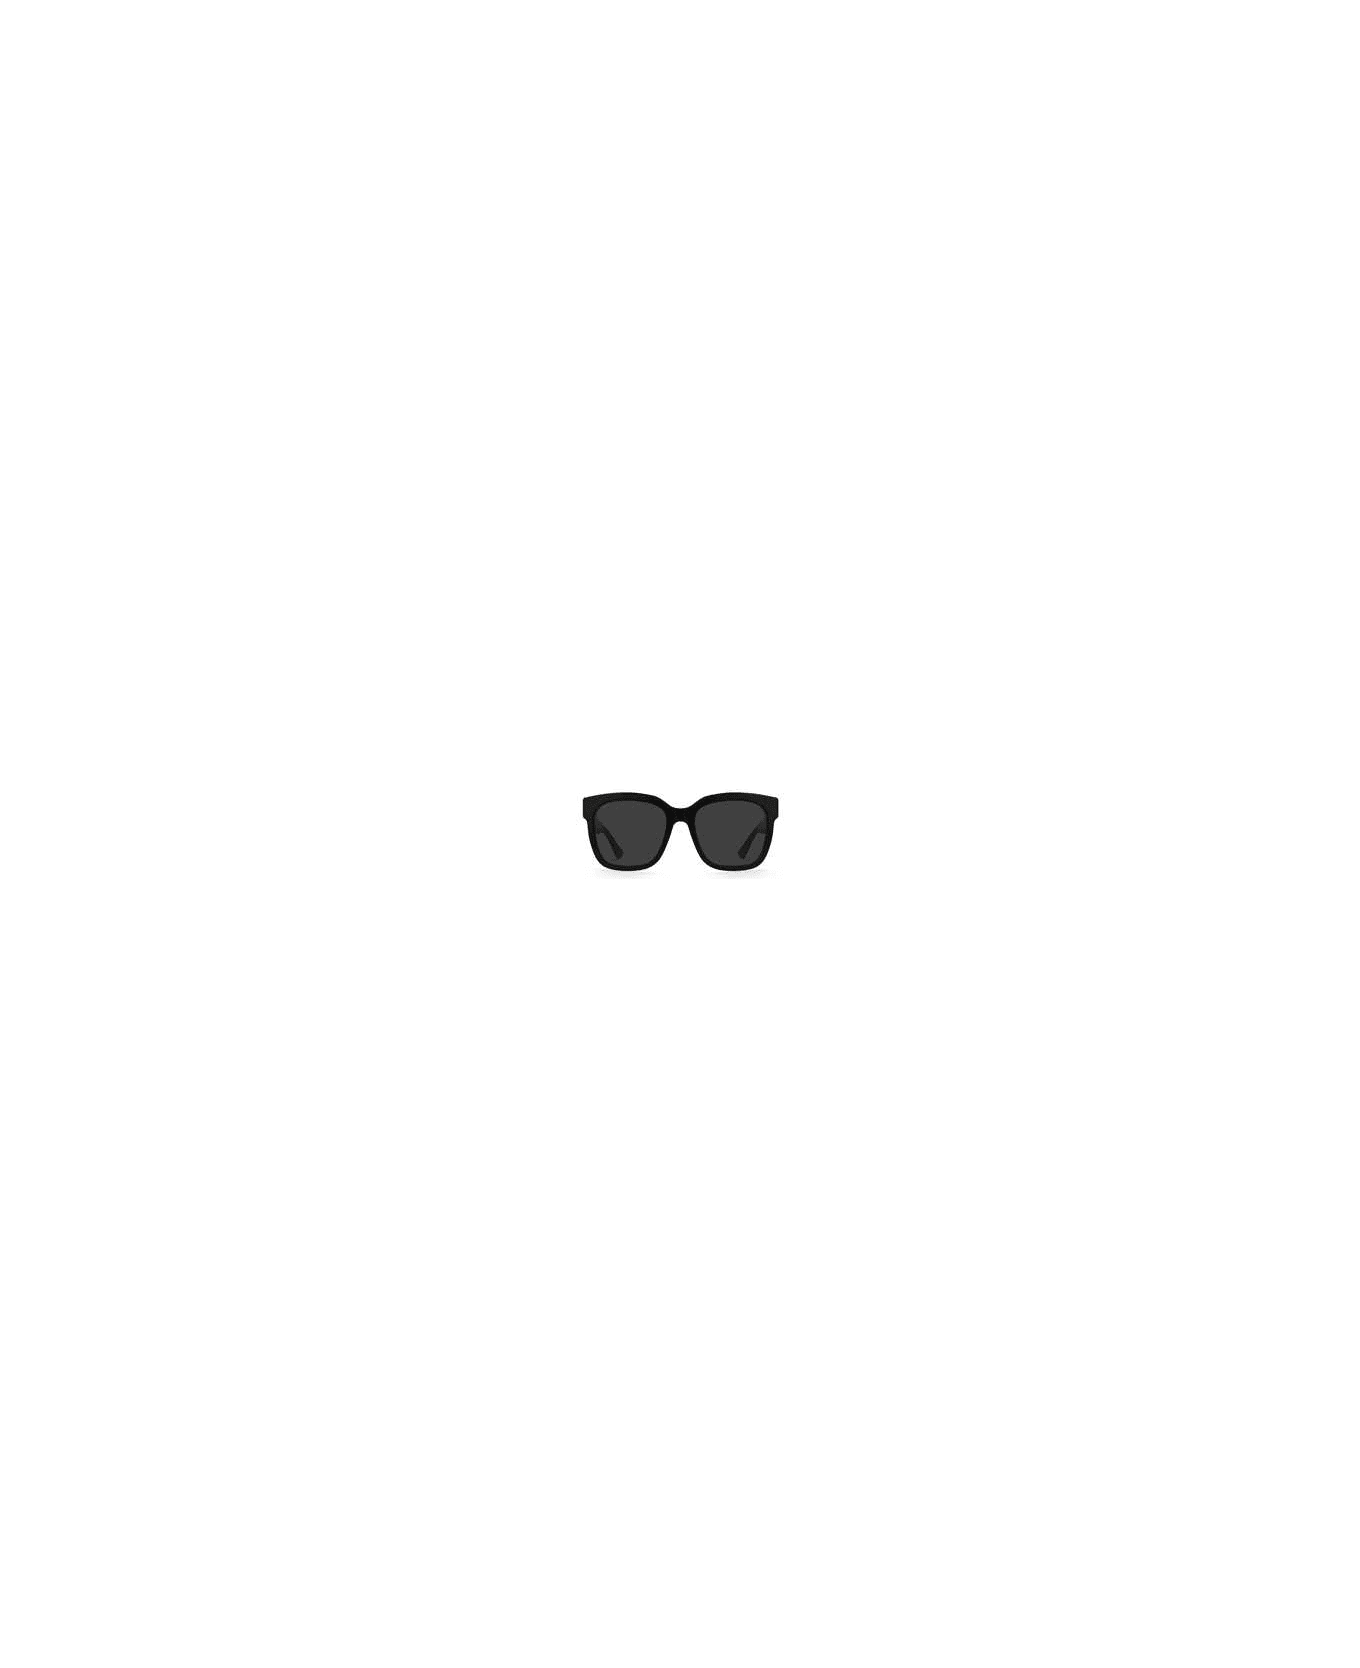 Gucci Eyewear Gg0034sn Sunglasses - 001 black black grey